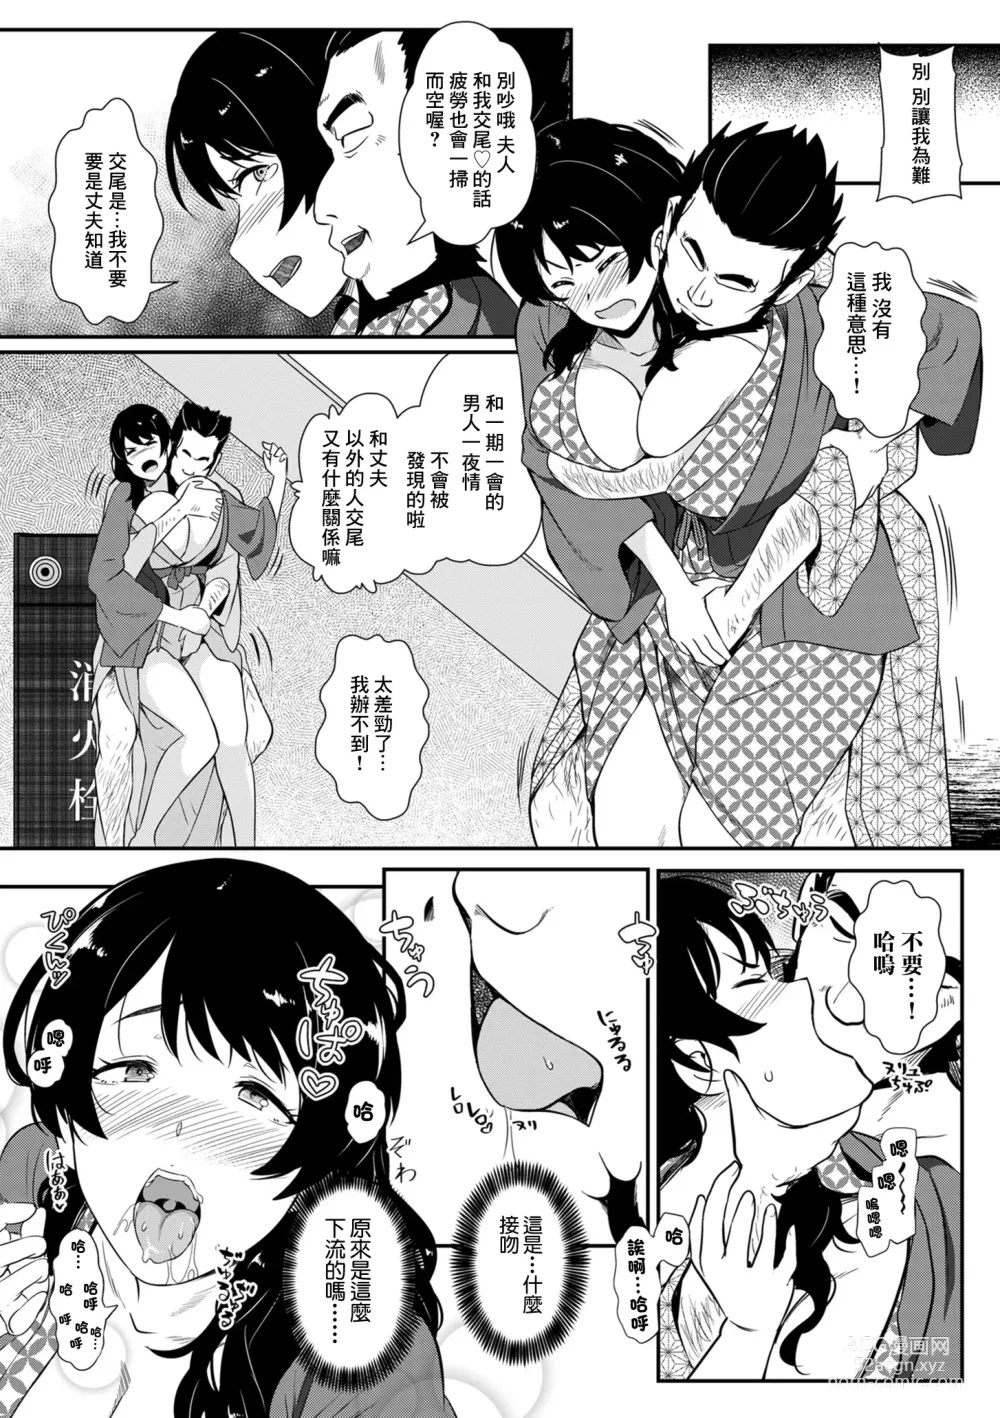 Page 7 of manga Haha wa Tabi no Owari ni...